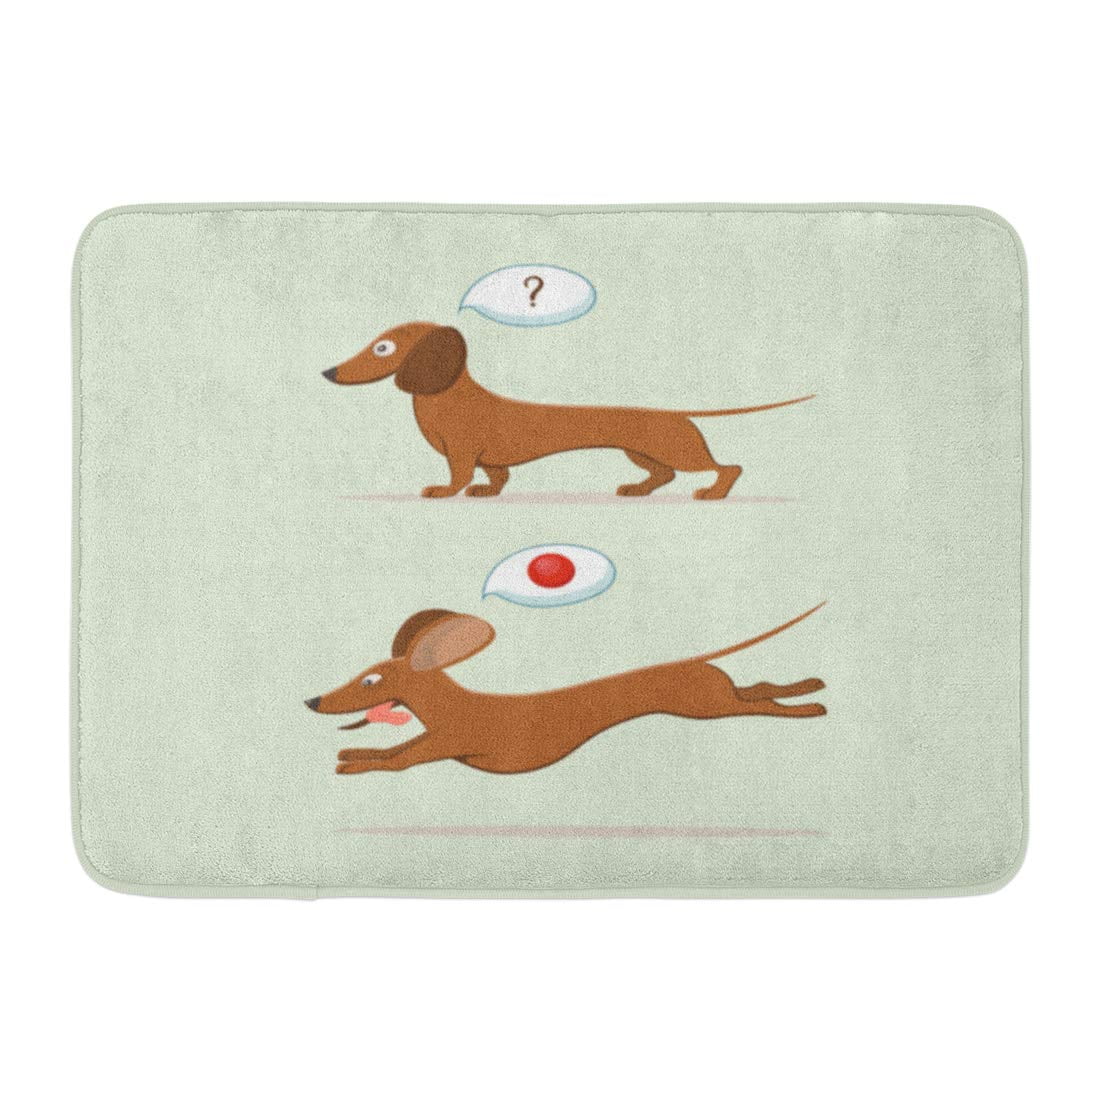 GODPOK Action Black Dog Cute Cartoon Dachshund Brown Jump Animal Rug  Doormat Bath Mat  inch 